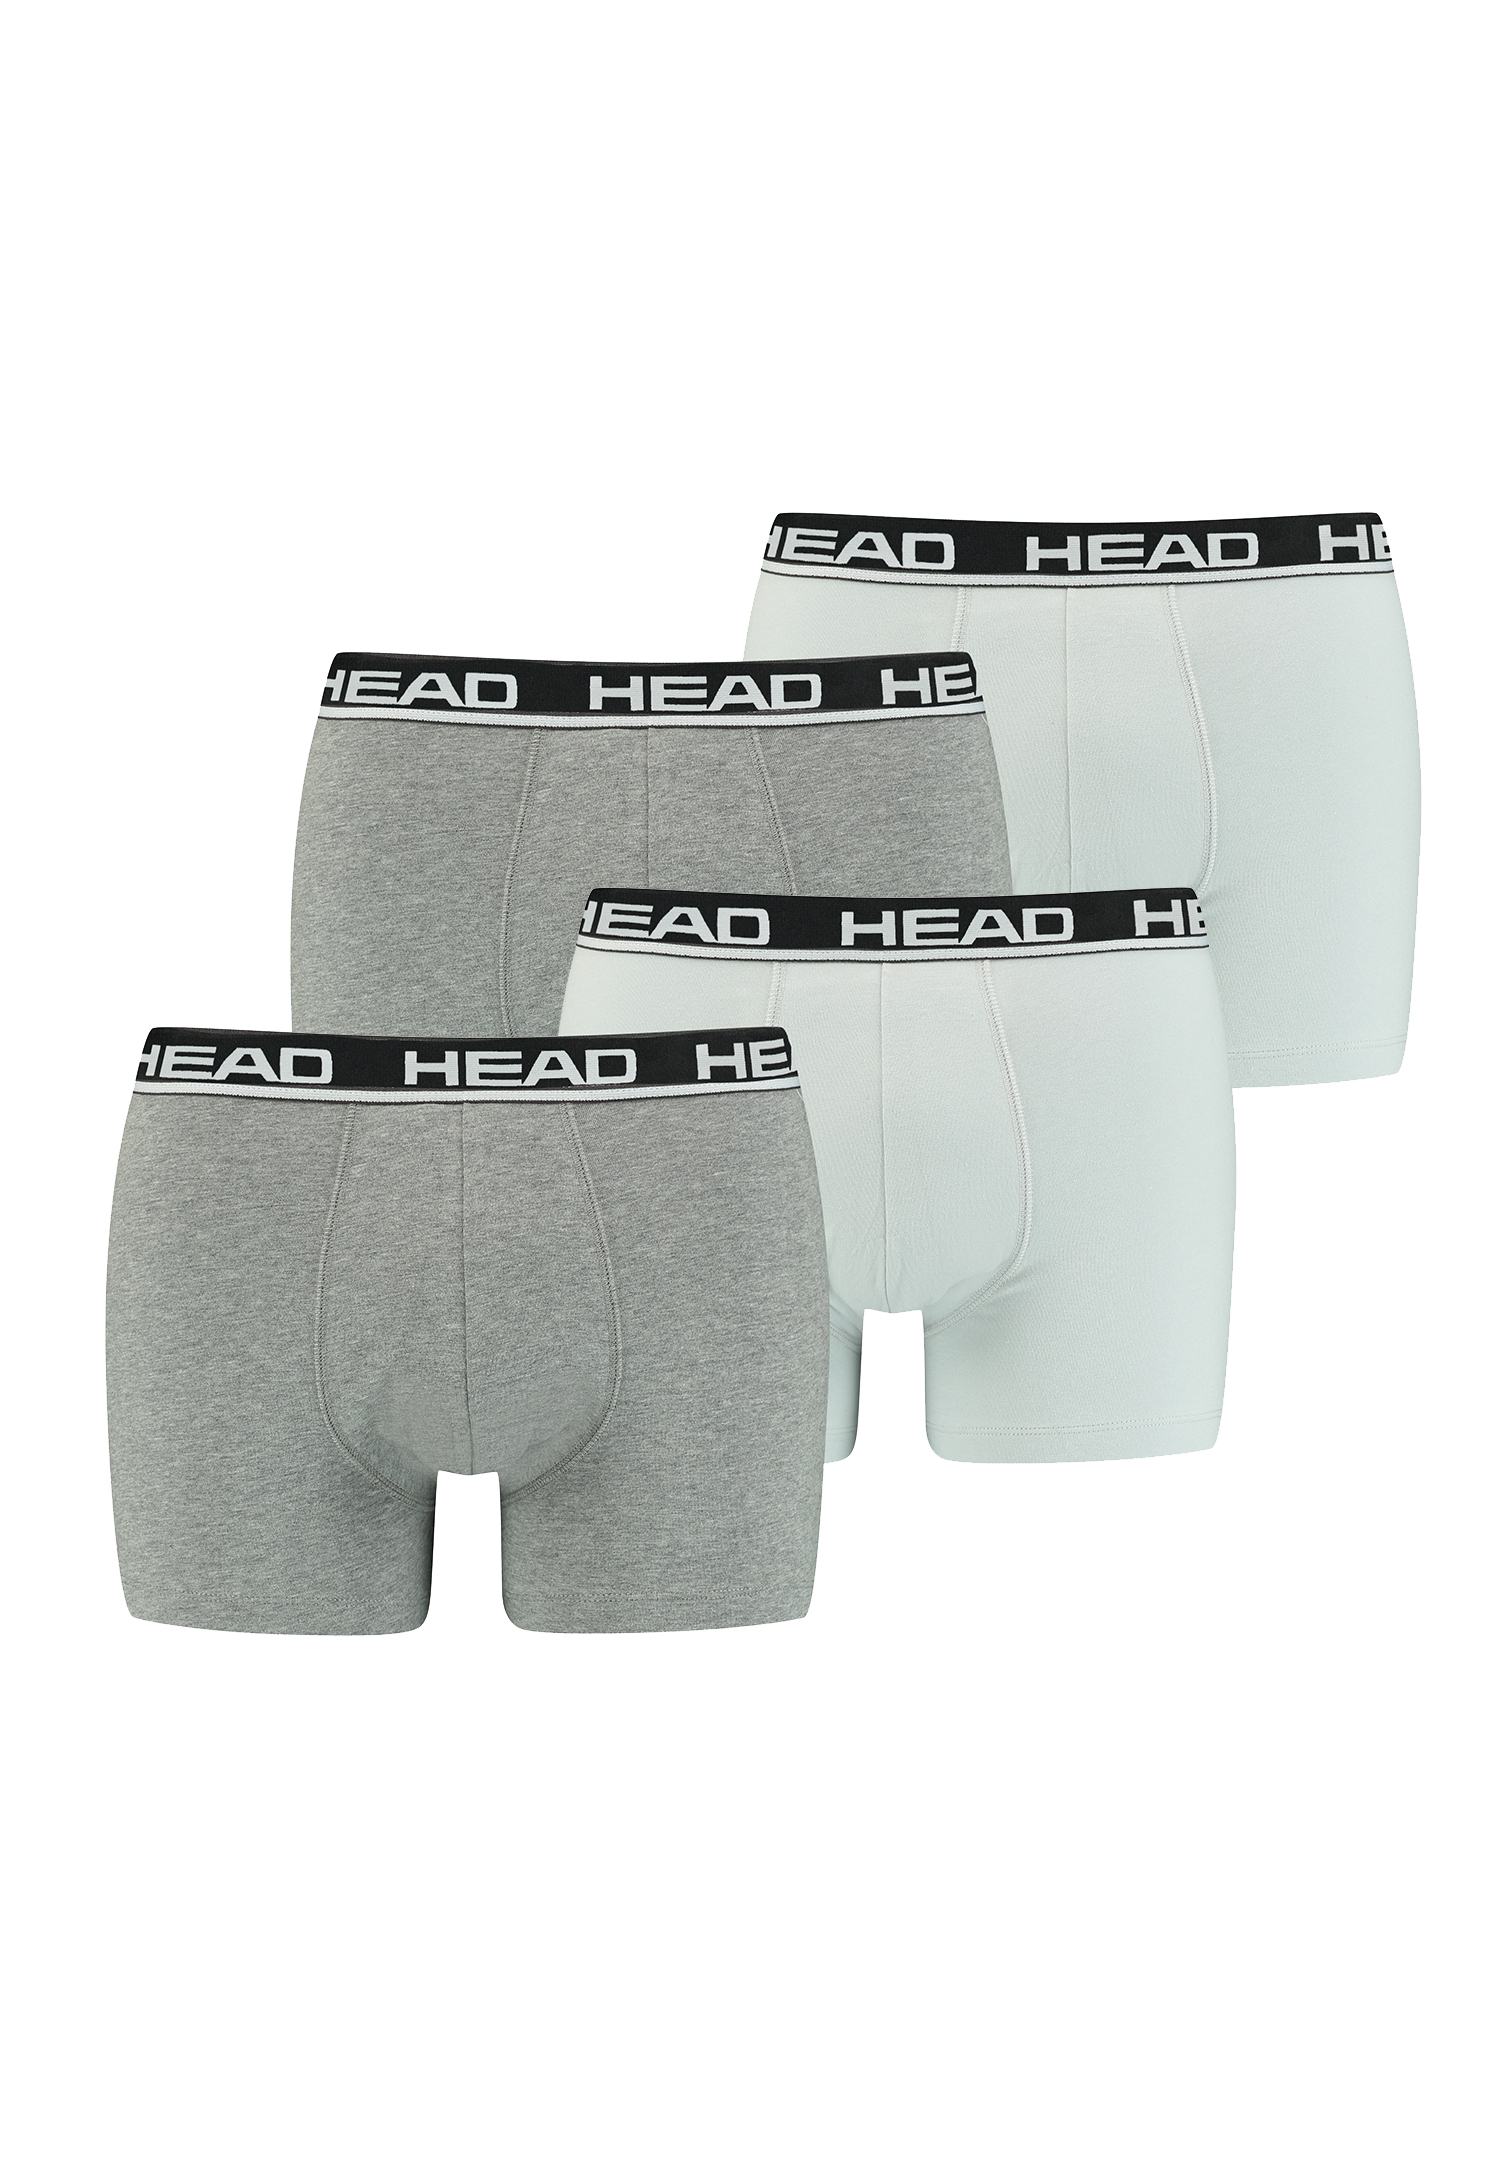 Head Herren Basic Boxer Pant Shorts Unterwäsche Unterhose 4 er Pack